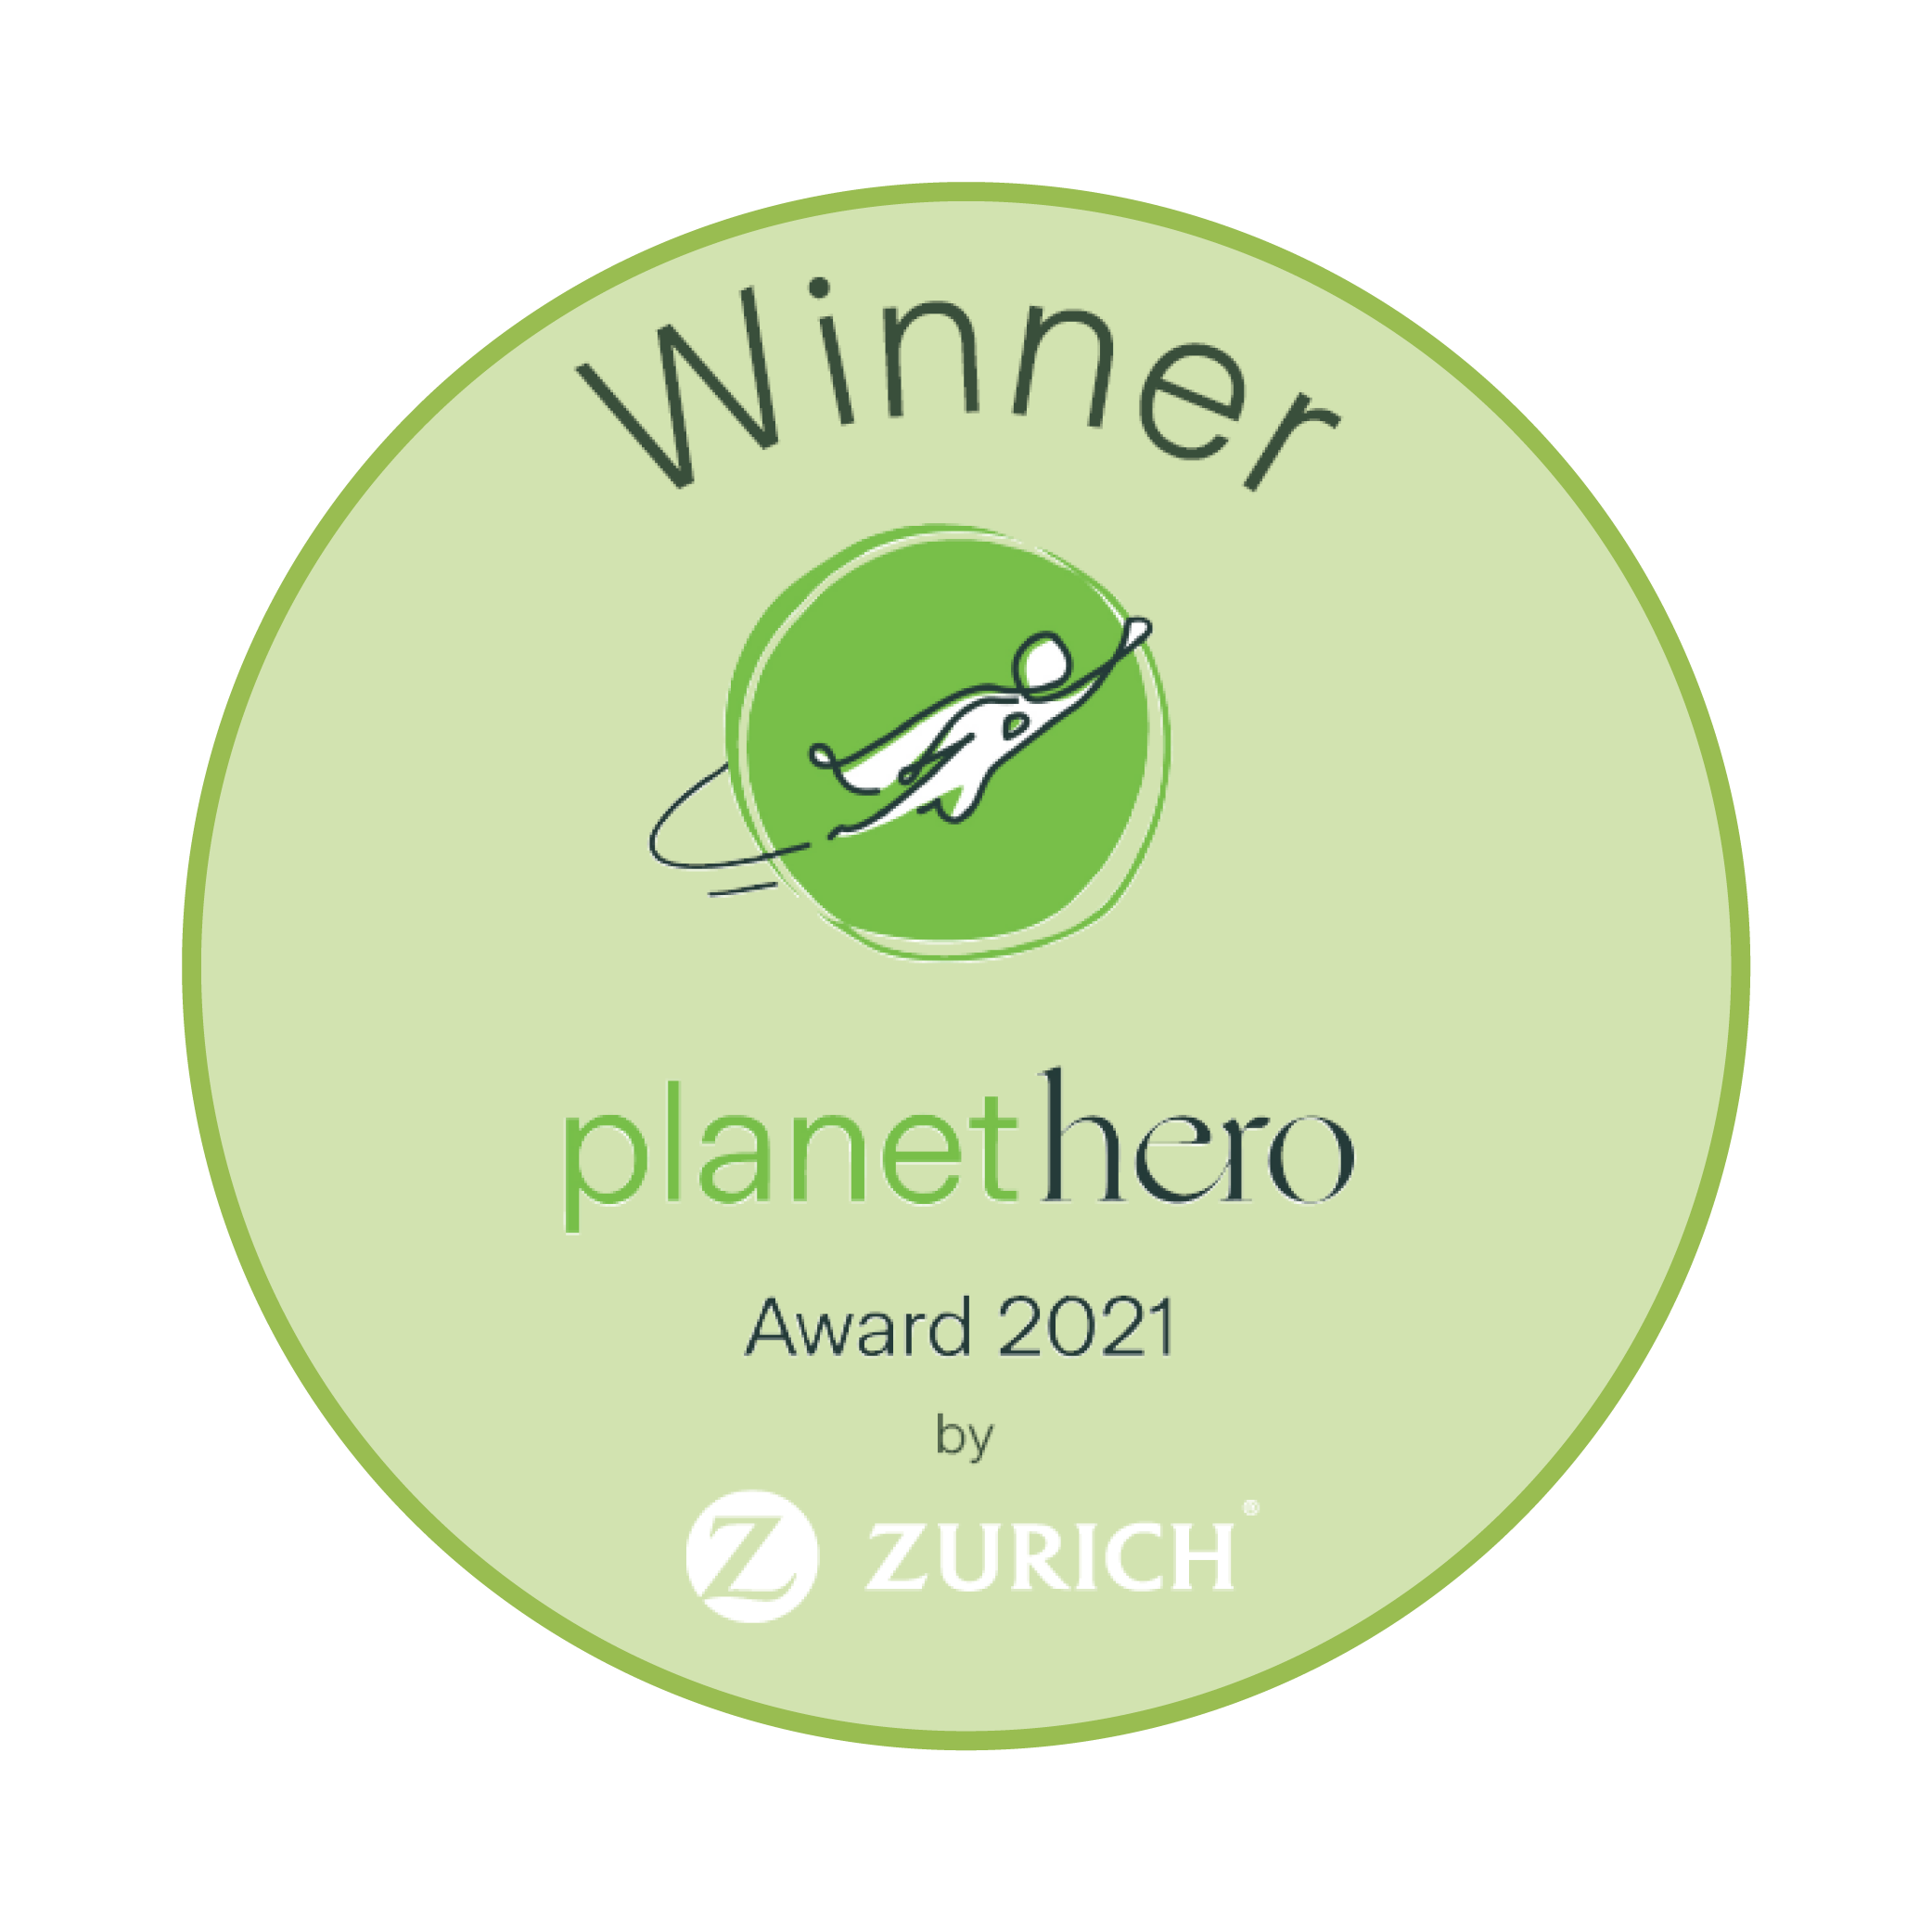 Planet Hero Award powered by Zurich